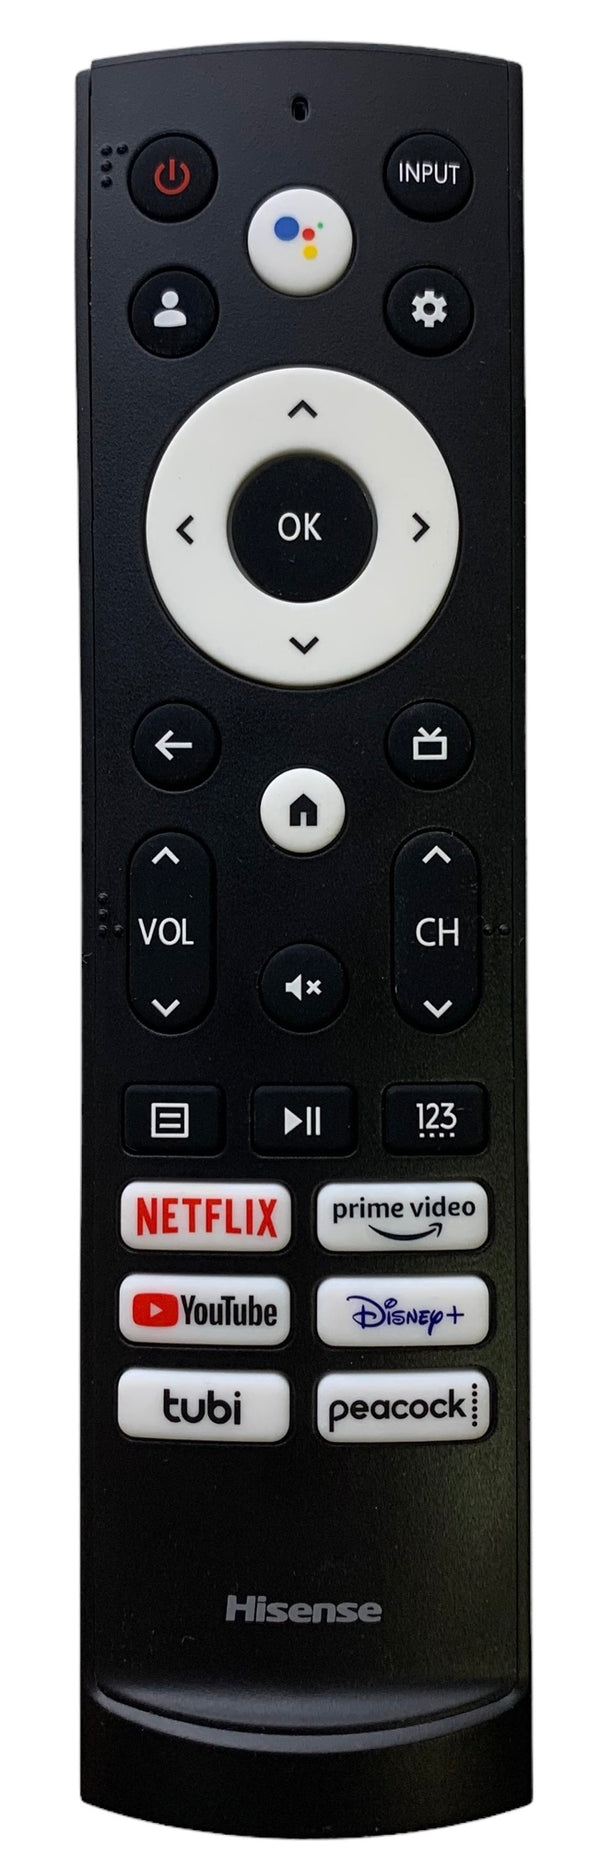 Hisense 299843 Netflix YouTube Tubi Prime Video Disney+ Remote Control -- New